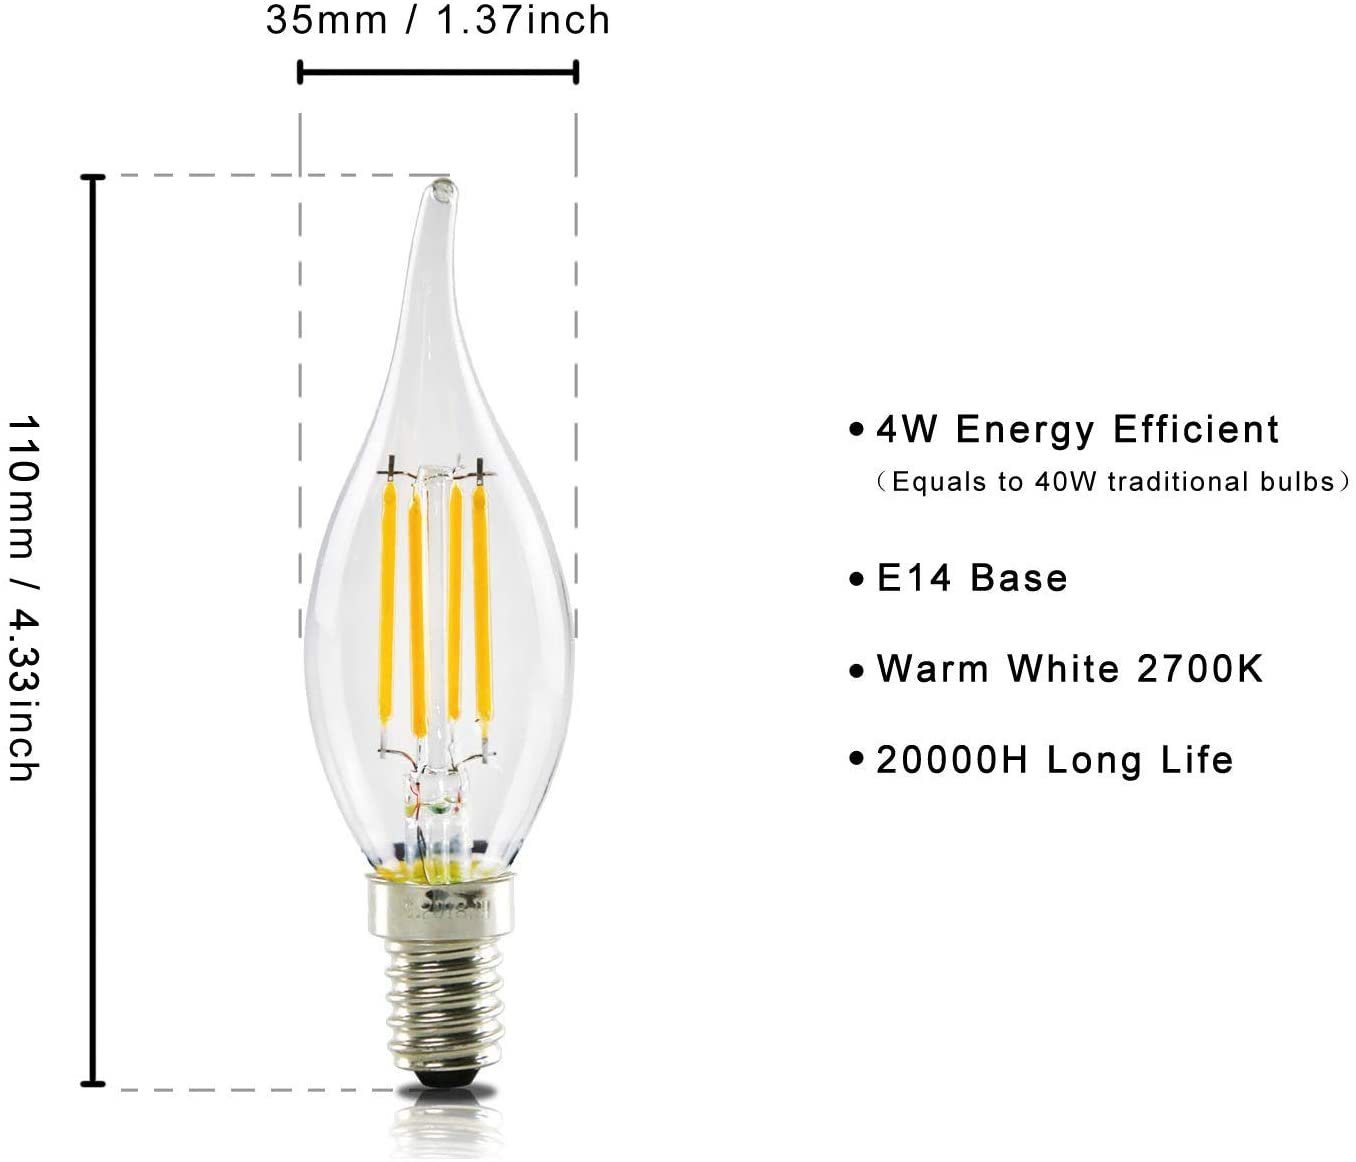 ZMH LED-Leuchtmittel 6X Dekorative Dimmbar E14, St., Glühbirne Kerzenbirne 4W E14 C35l-klar 3000k, Retro Antike, Nicht 6 C35L Warmweiß